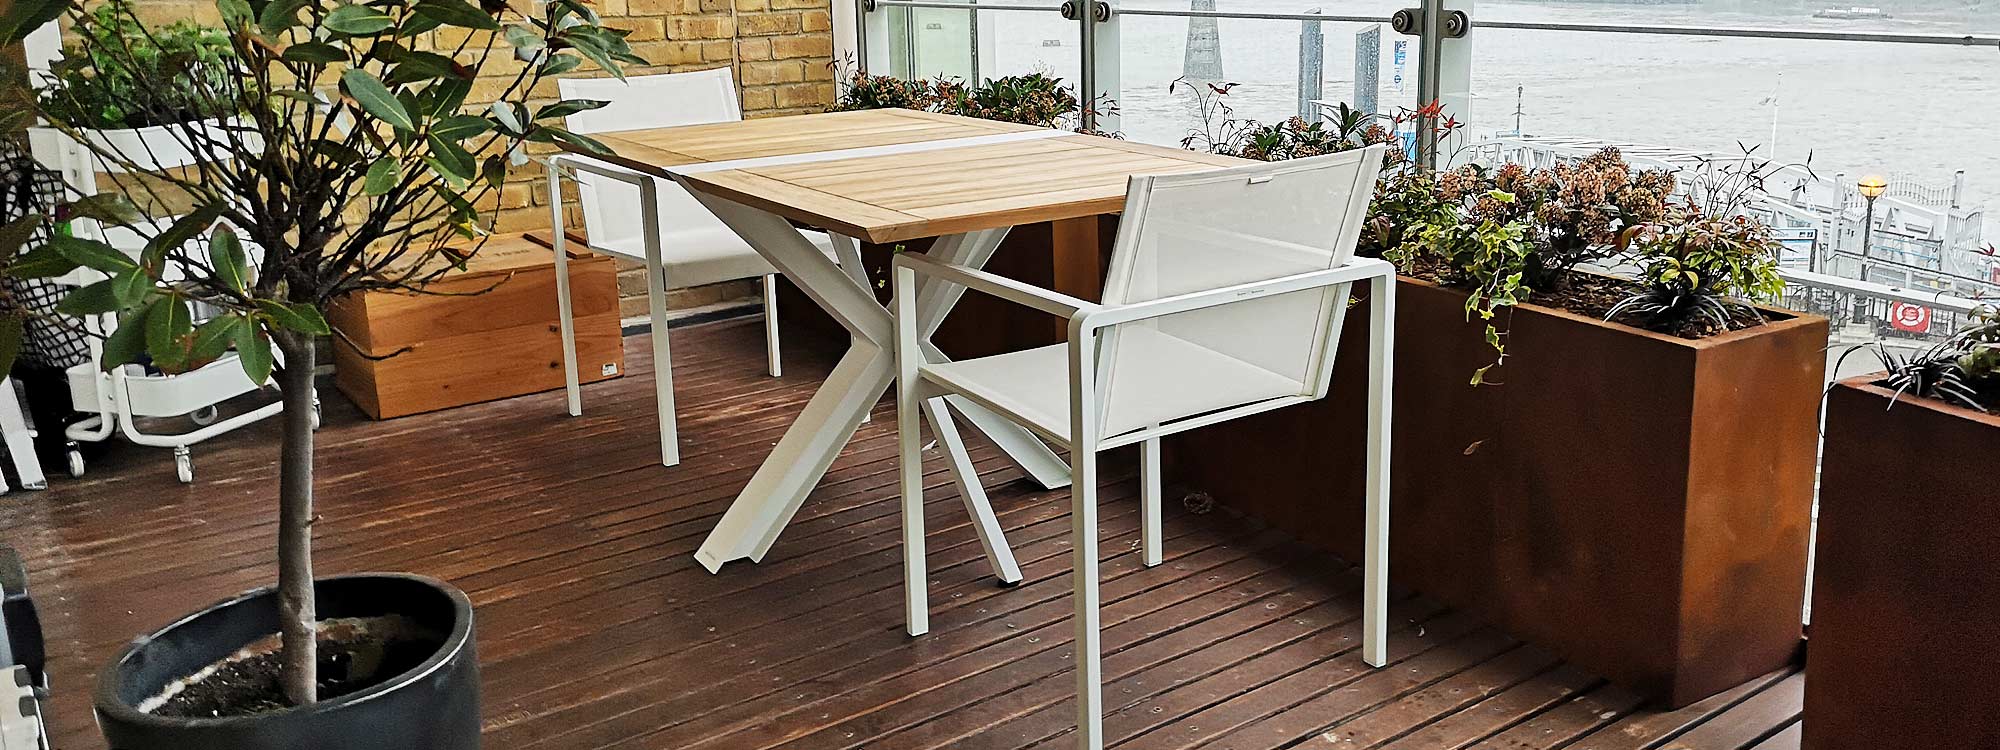 Photo of London Modern Rooftop Terrace Furniture Installation Of Traverse Folding Garden Table & Alura Stacking Garden Chairs. Royal Botania Luxury Garden Furniture.